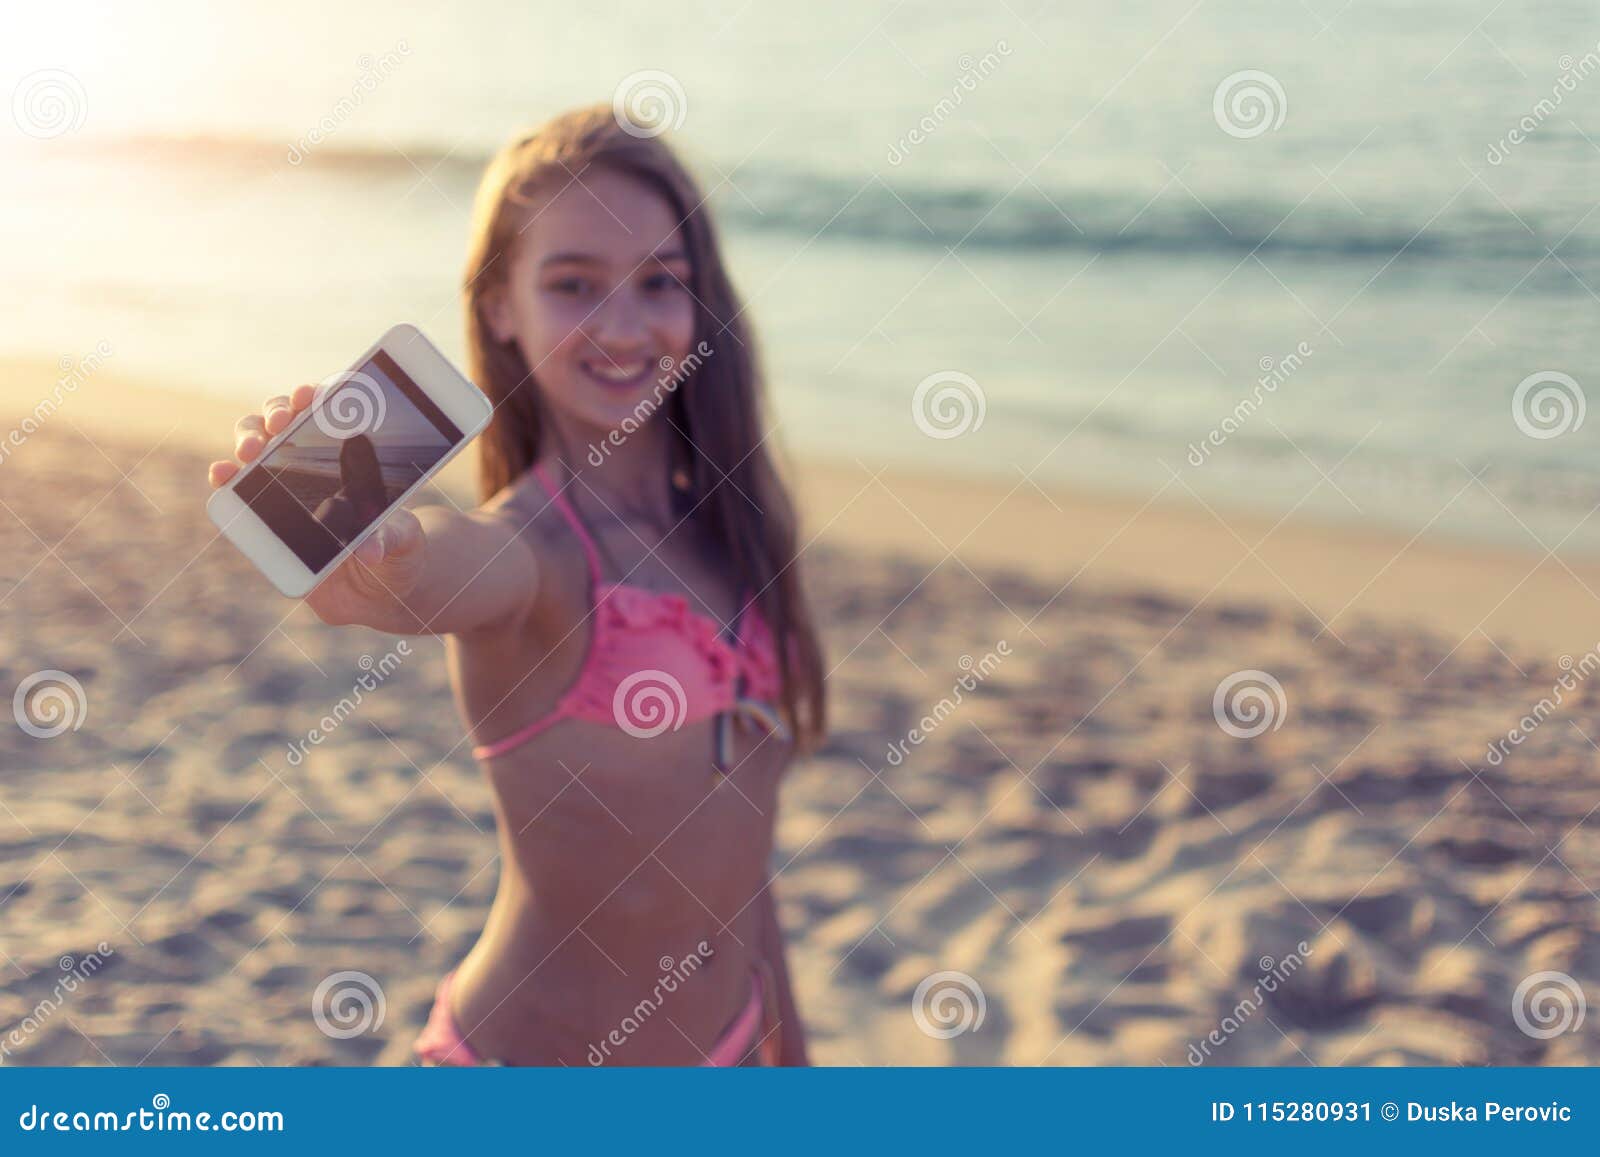 women with dildo selfie